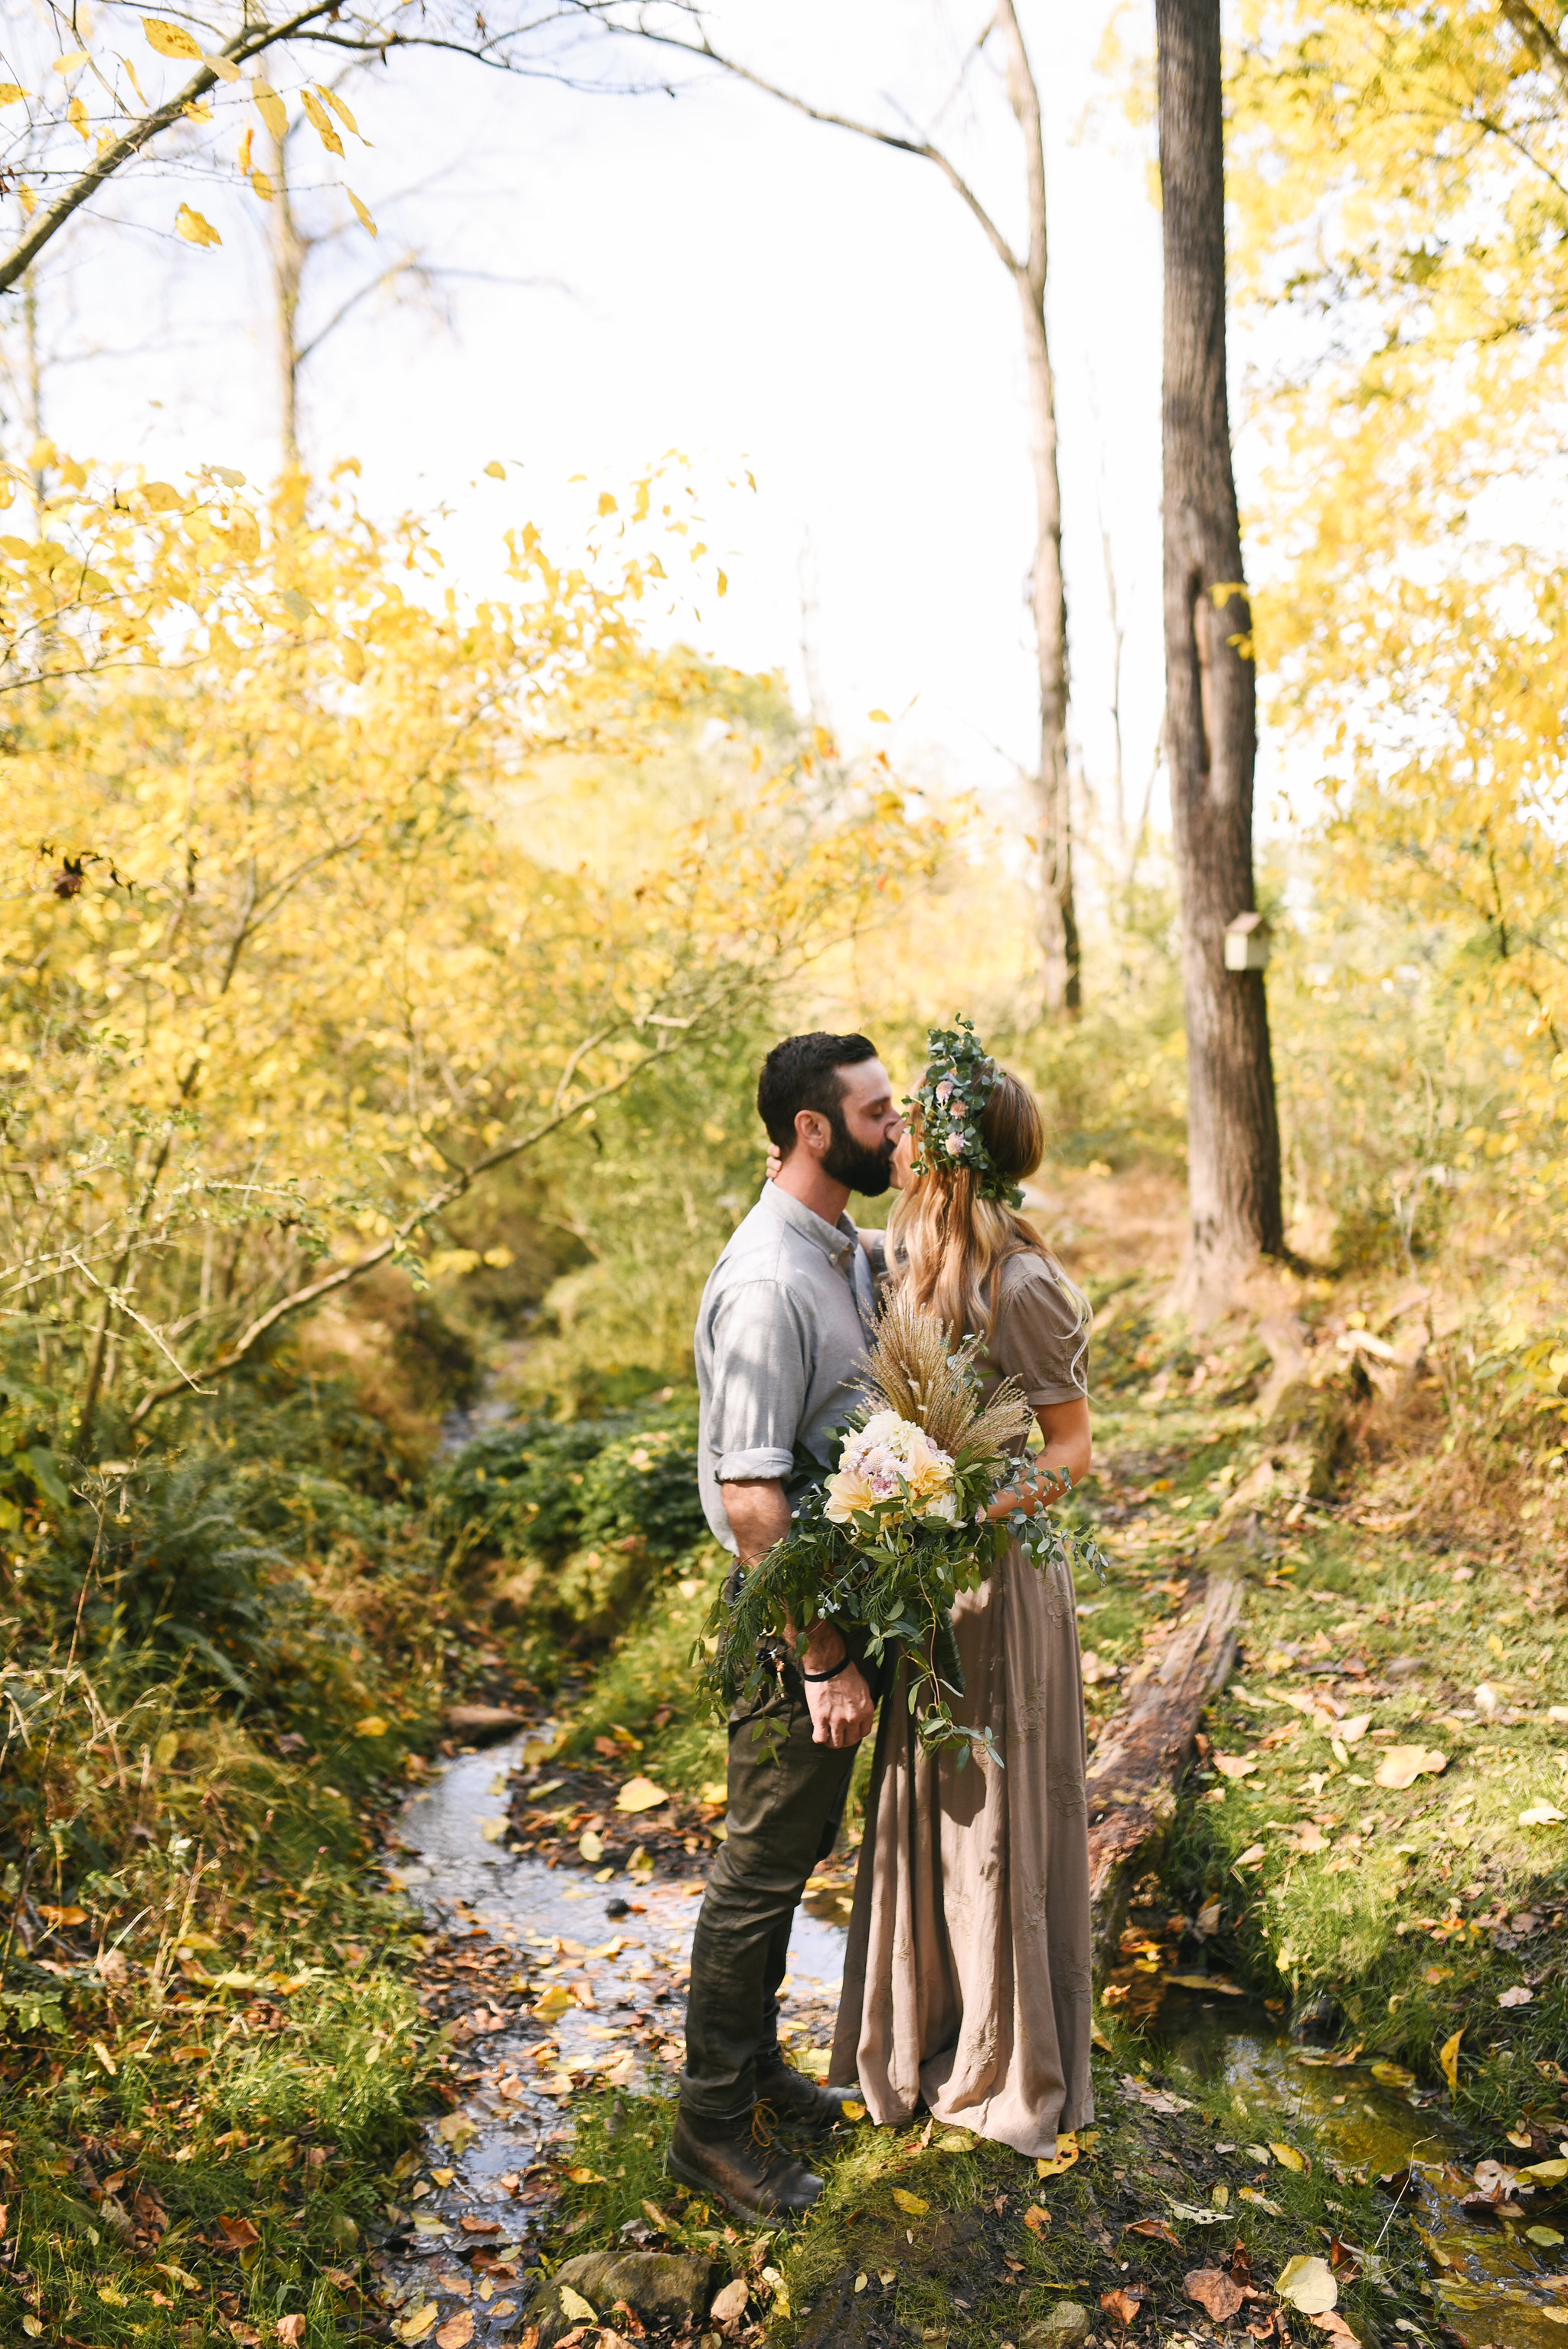  Baltimore, Maryland Wedding Photographer, Backyard Wedding, DIY, Rustic, Casual, Fall Wedding, Woodland, Flower Crown, Linen Wedding Dress, Eucalyptus  